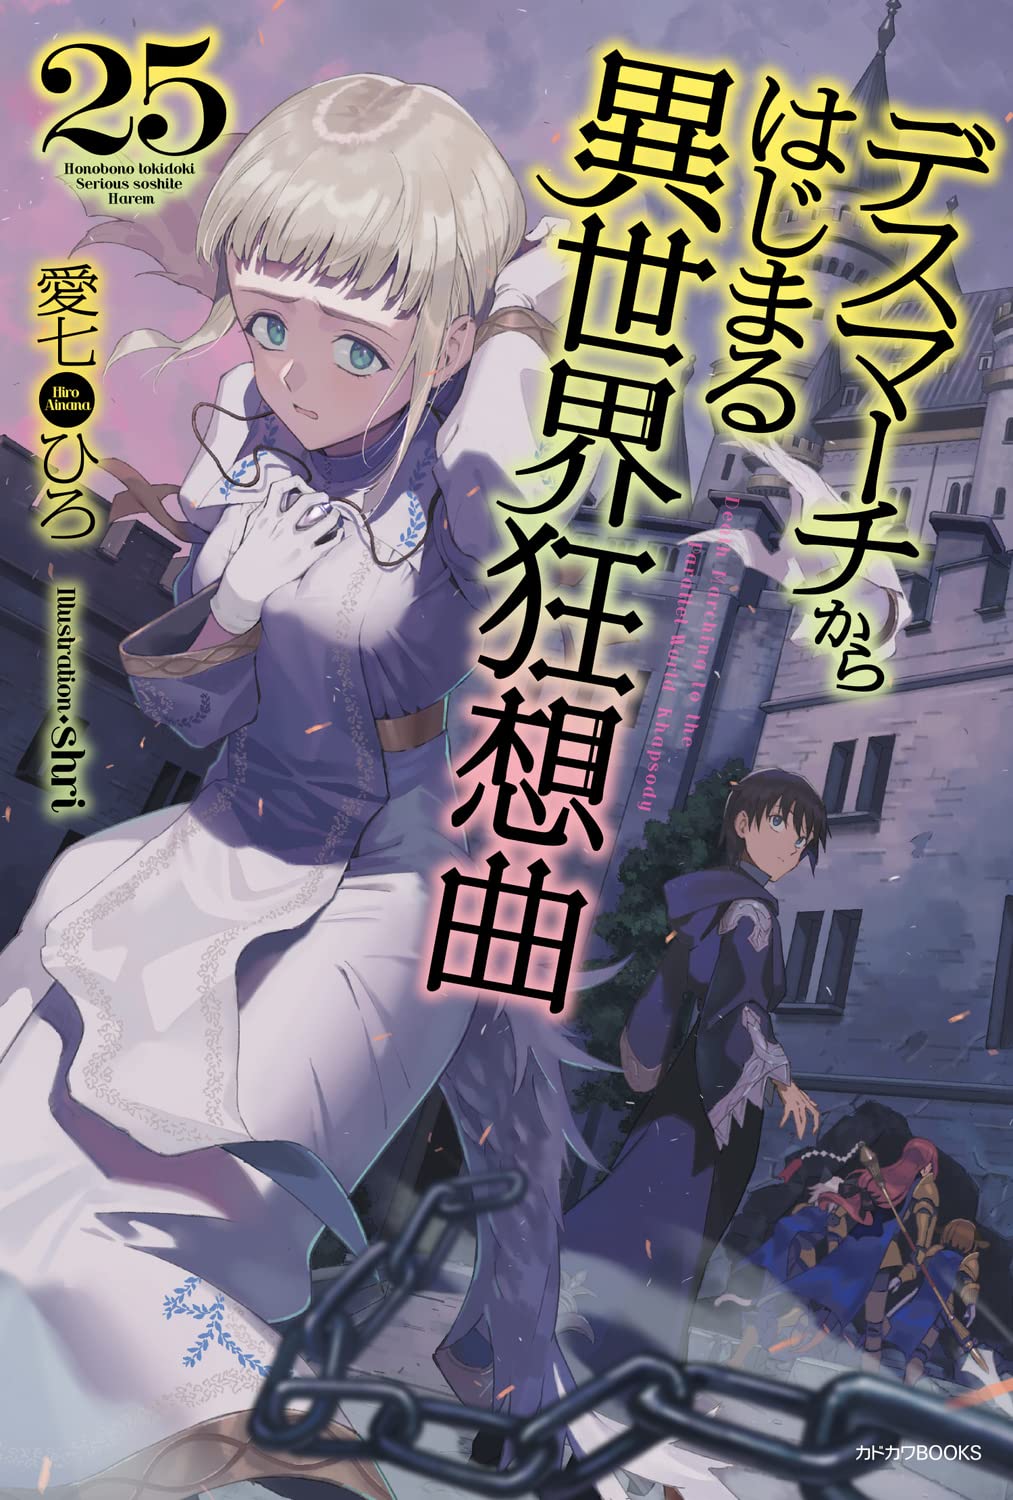 Death March kara Hajimaru Isekai Kyousoukyoku (Light Novel) Vol.14